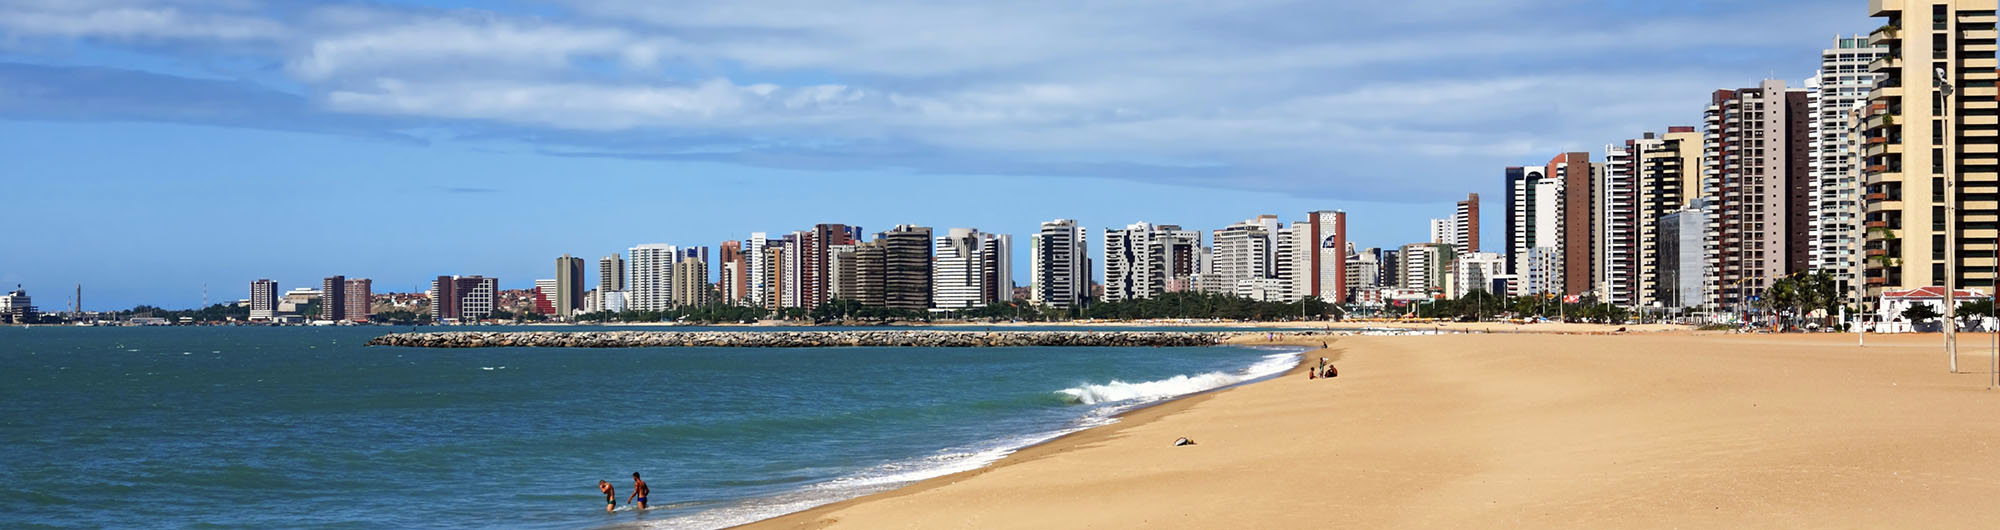 Search and compare cheap flights from Rio de Janeiro to Fortaleza